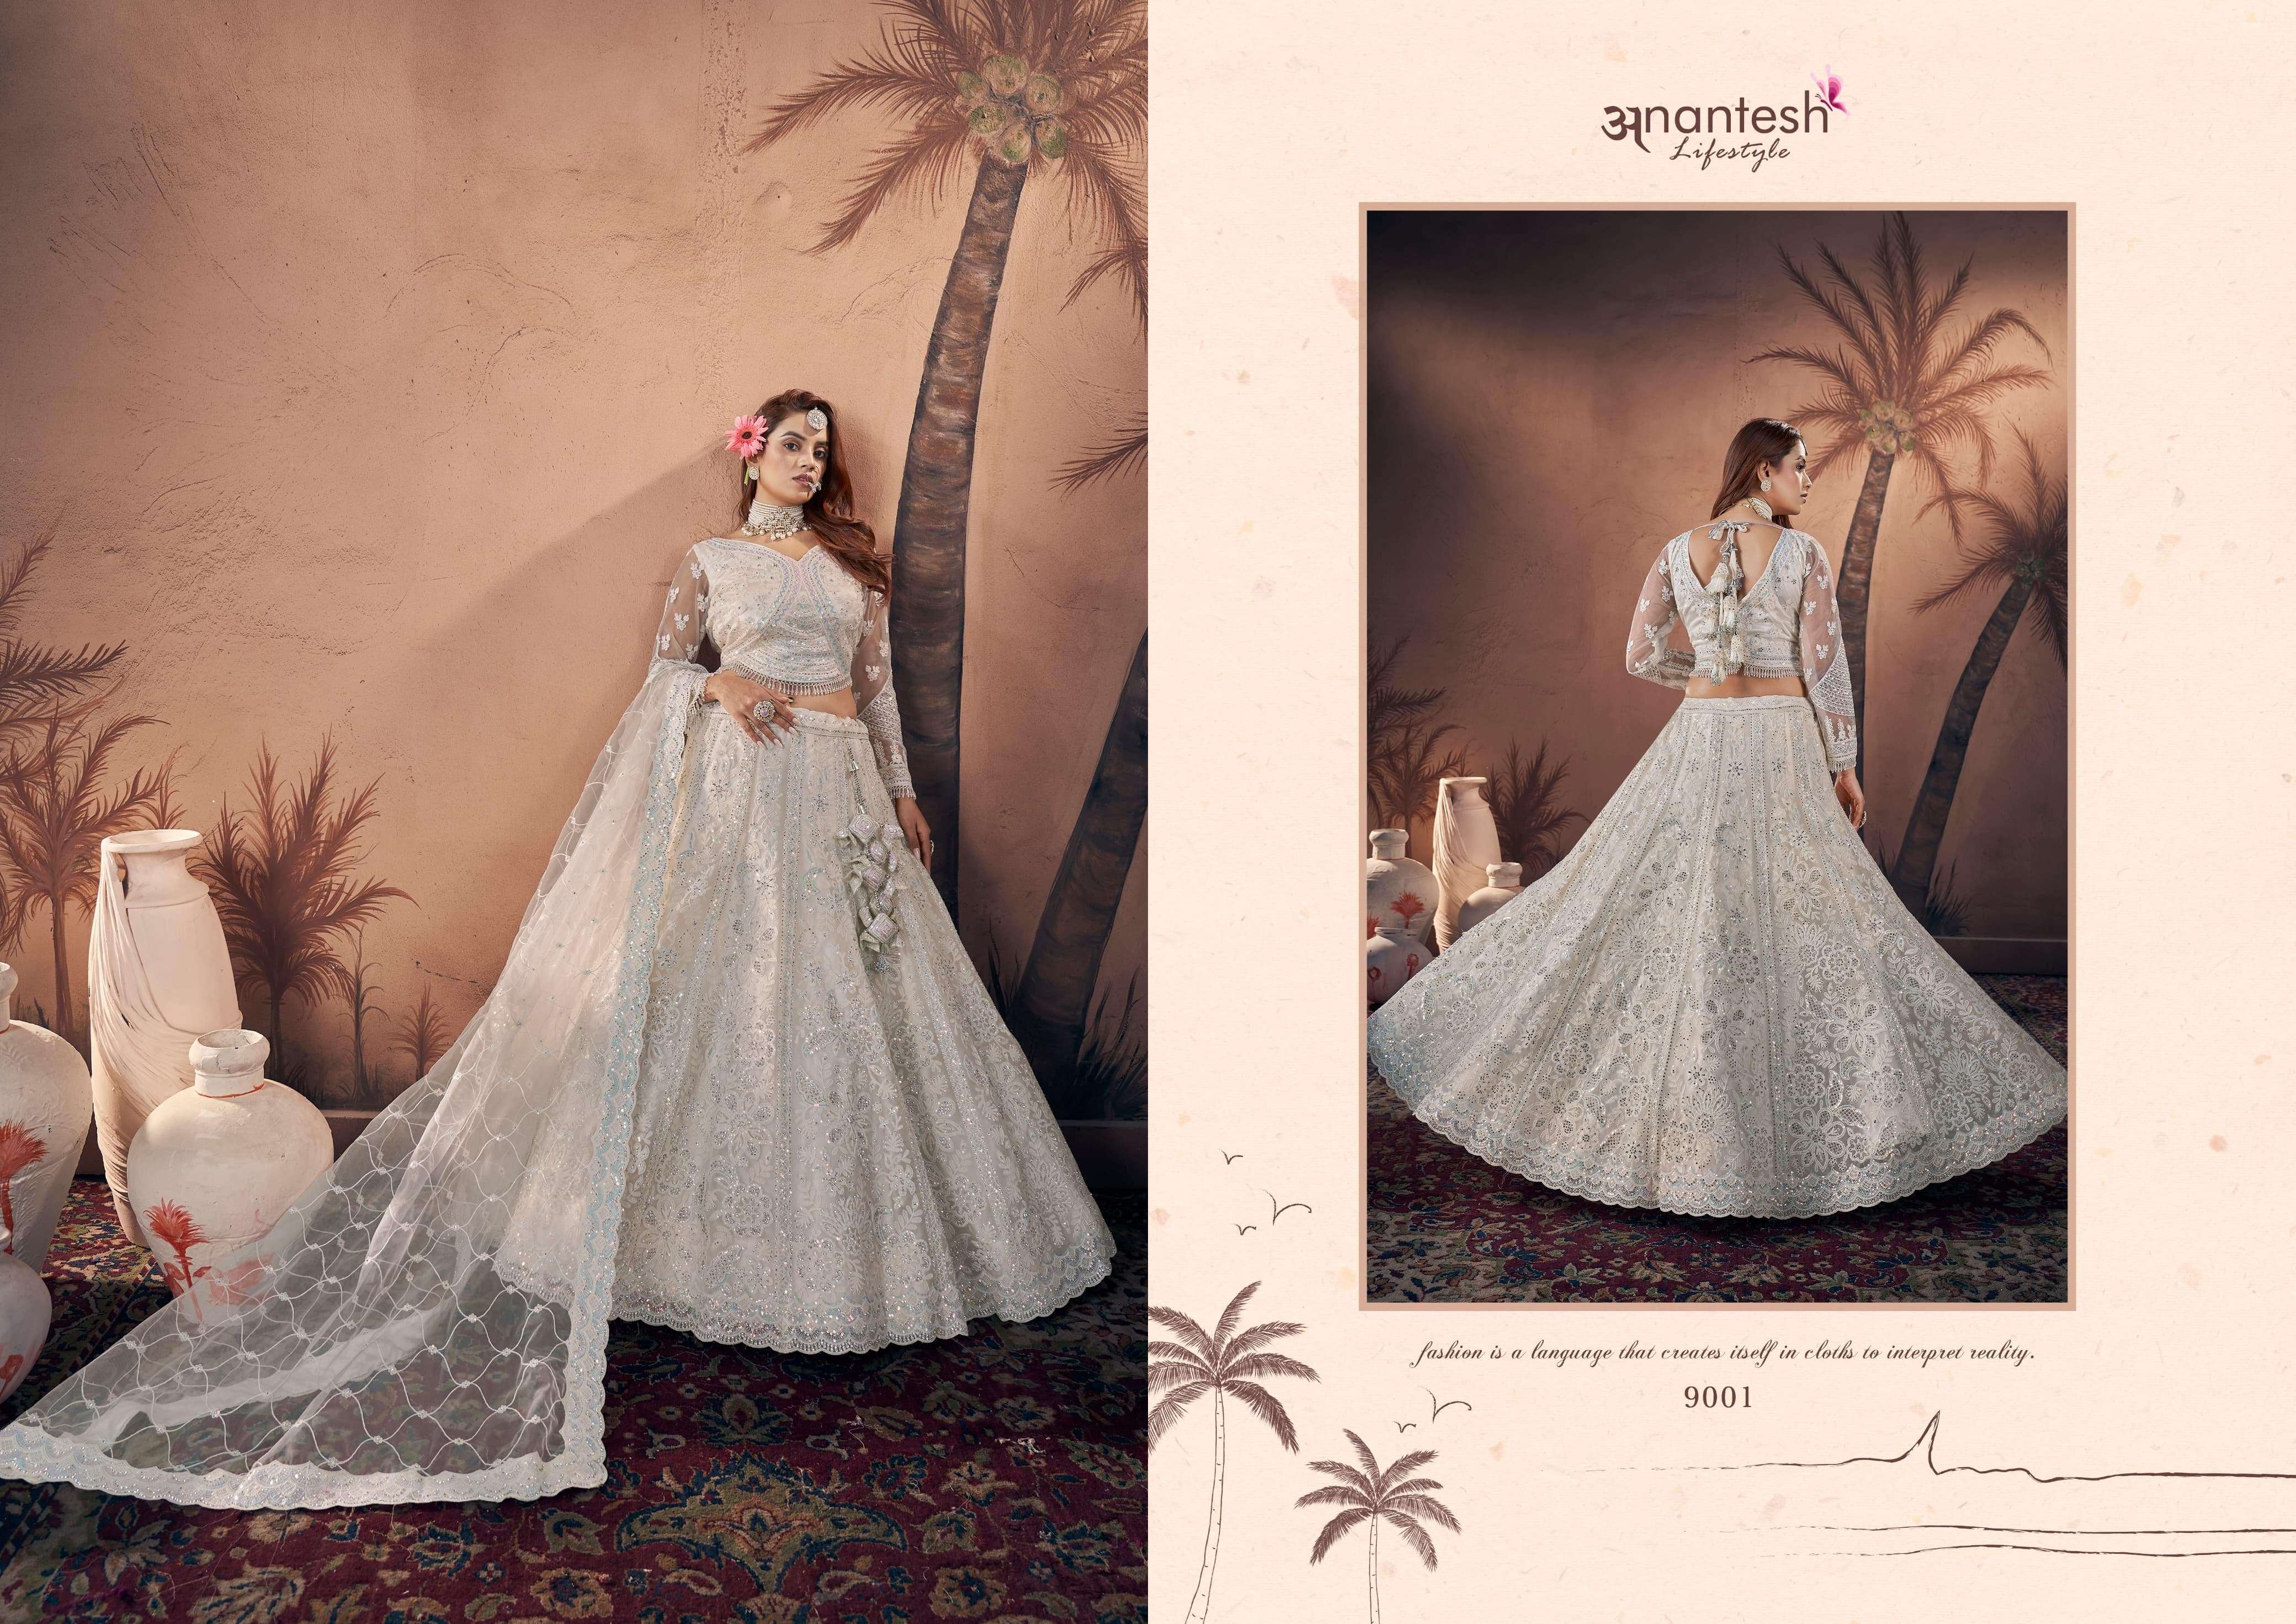 anantesh bridal couture 2024 code 9001 premium georgette innovative look lehngha cataloug